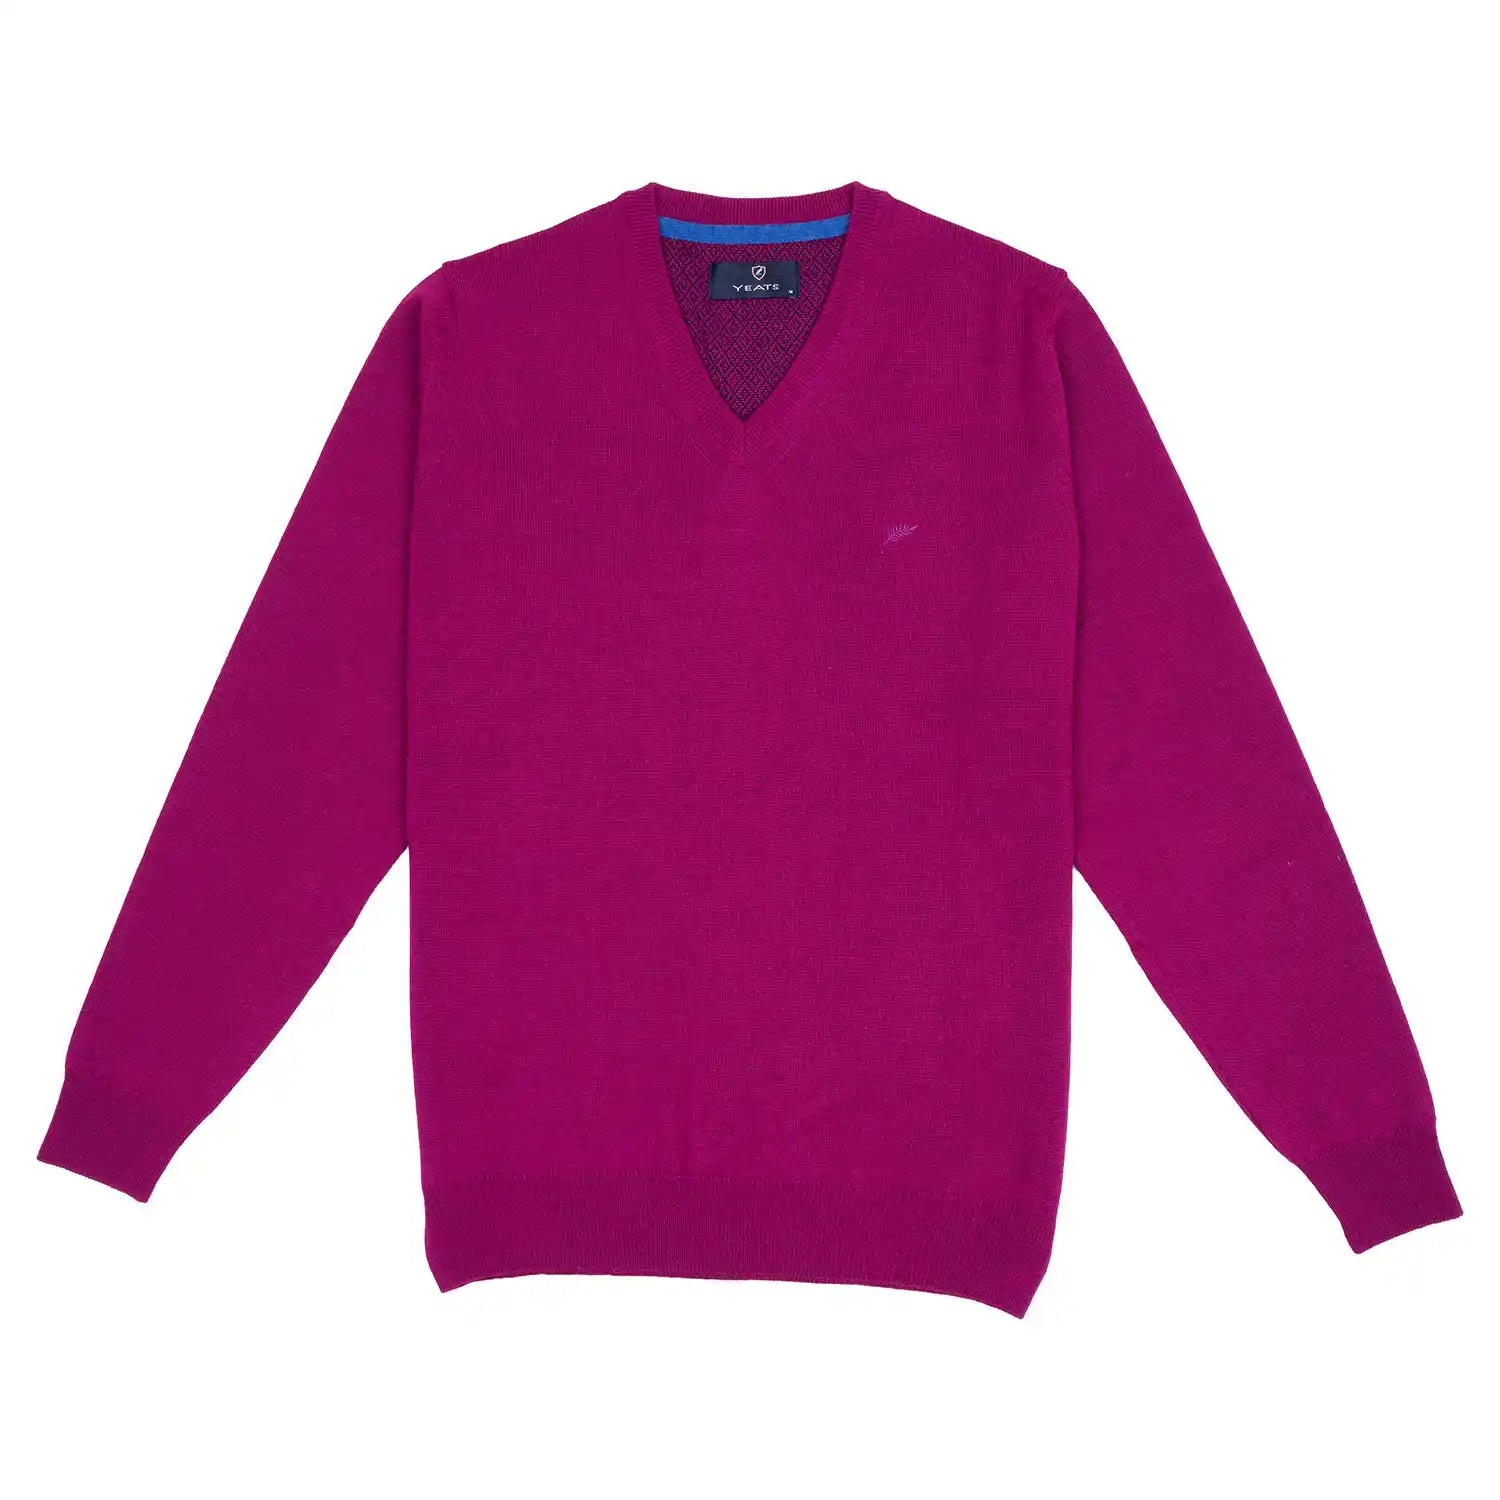 Yeats Plain V Neck Jumper - Pink 1 Shaws Department Stores